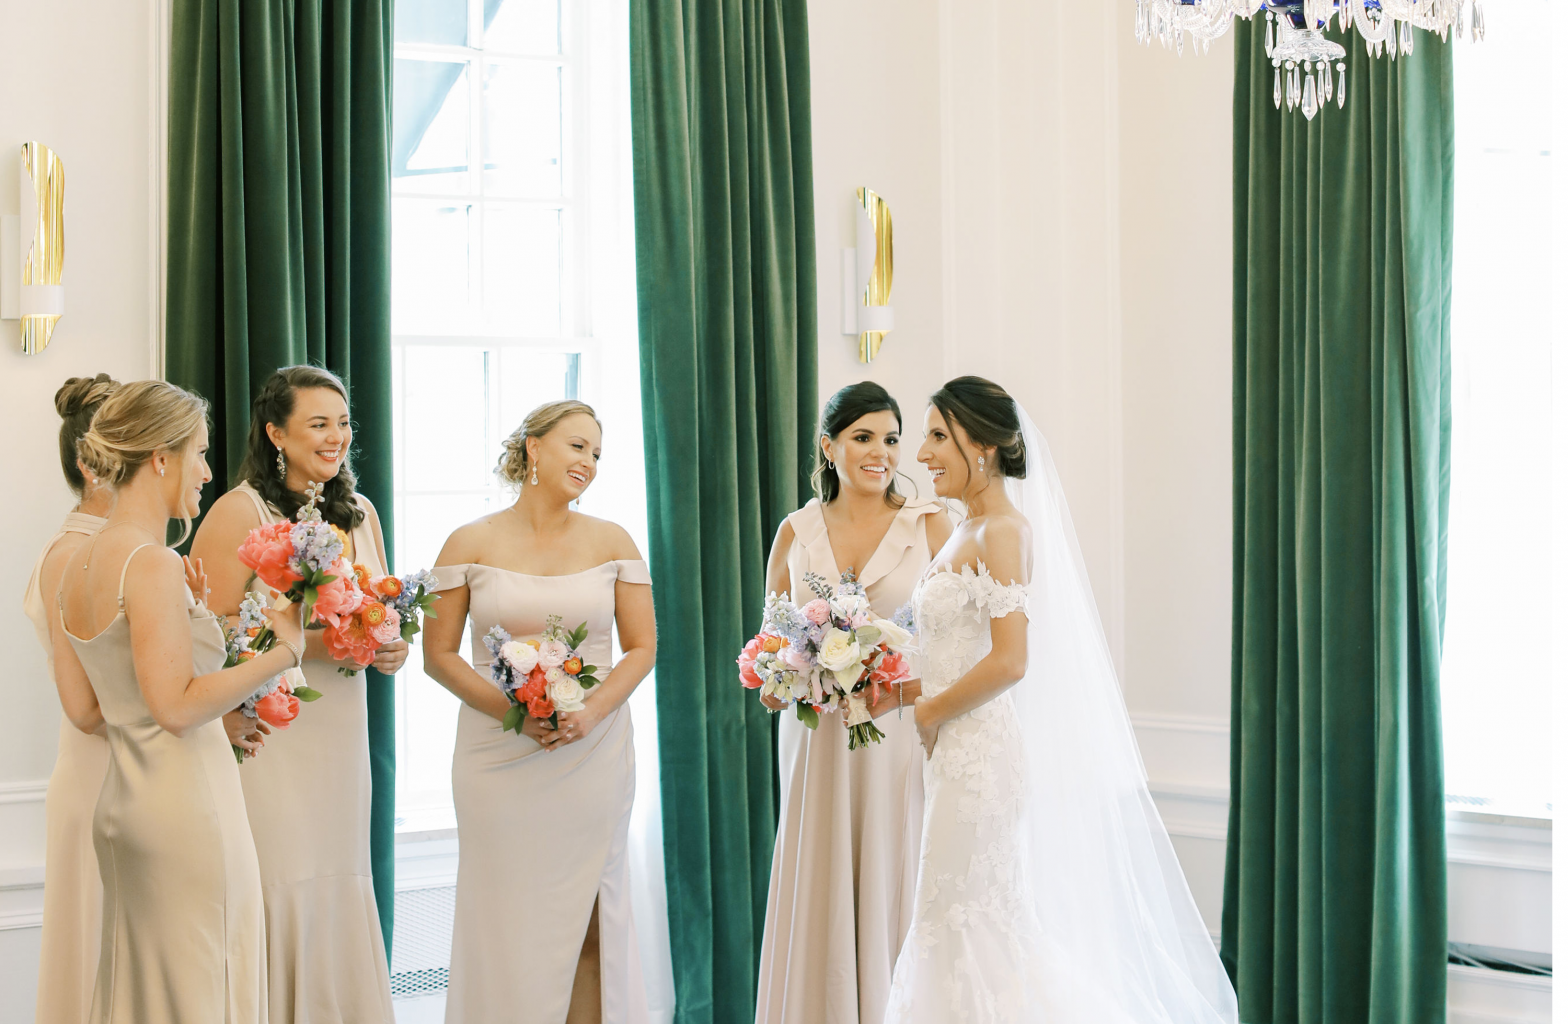 Victoria, Bridesmaids, Wedding at The Newbury Boston